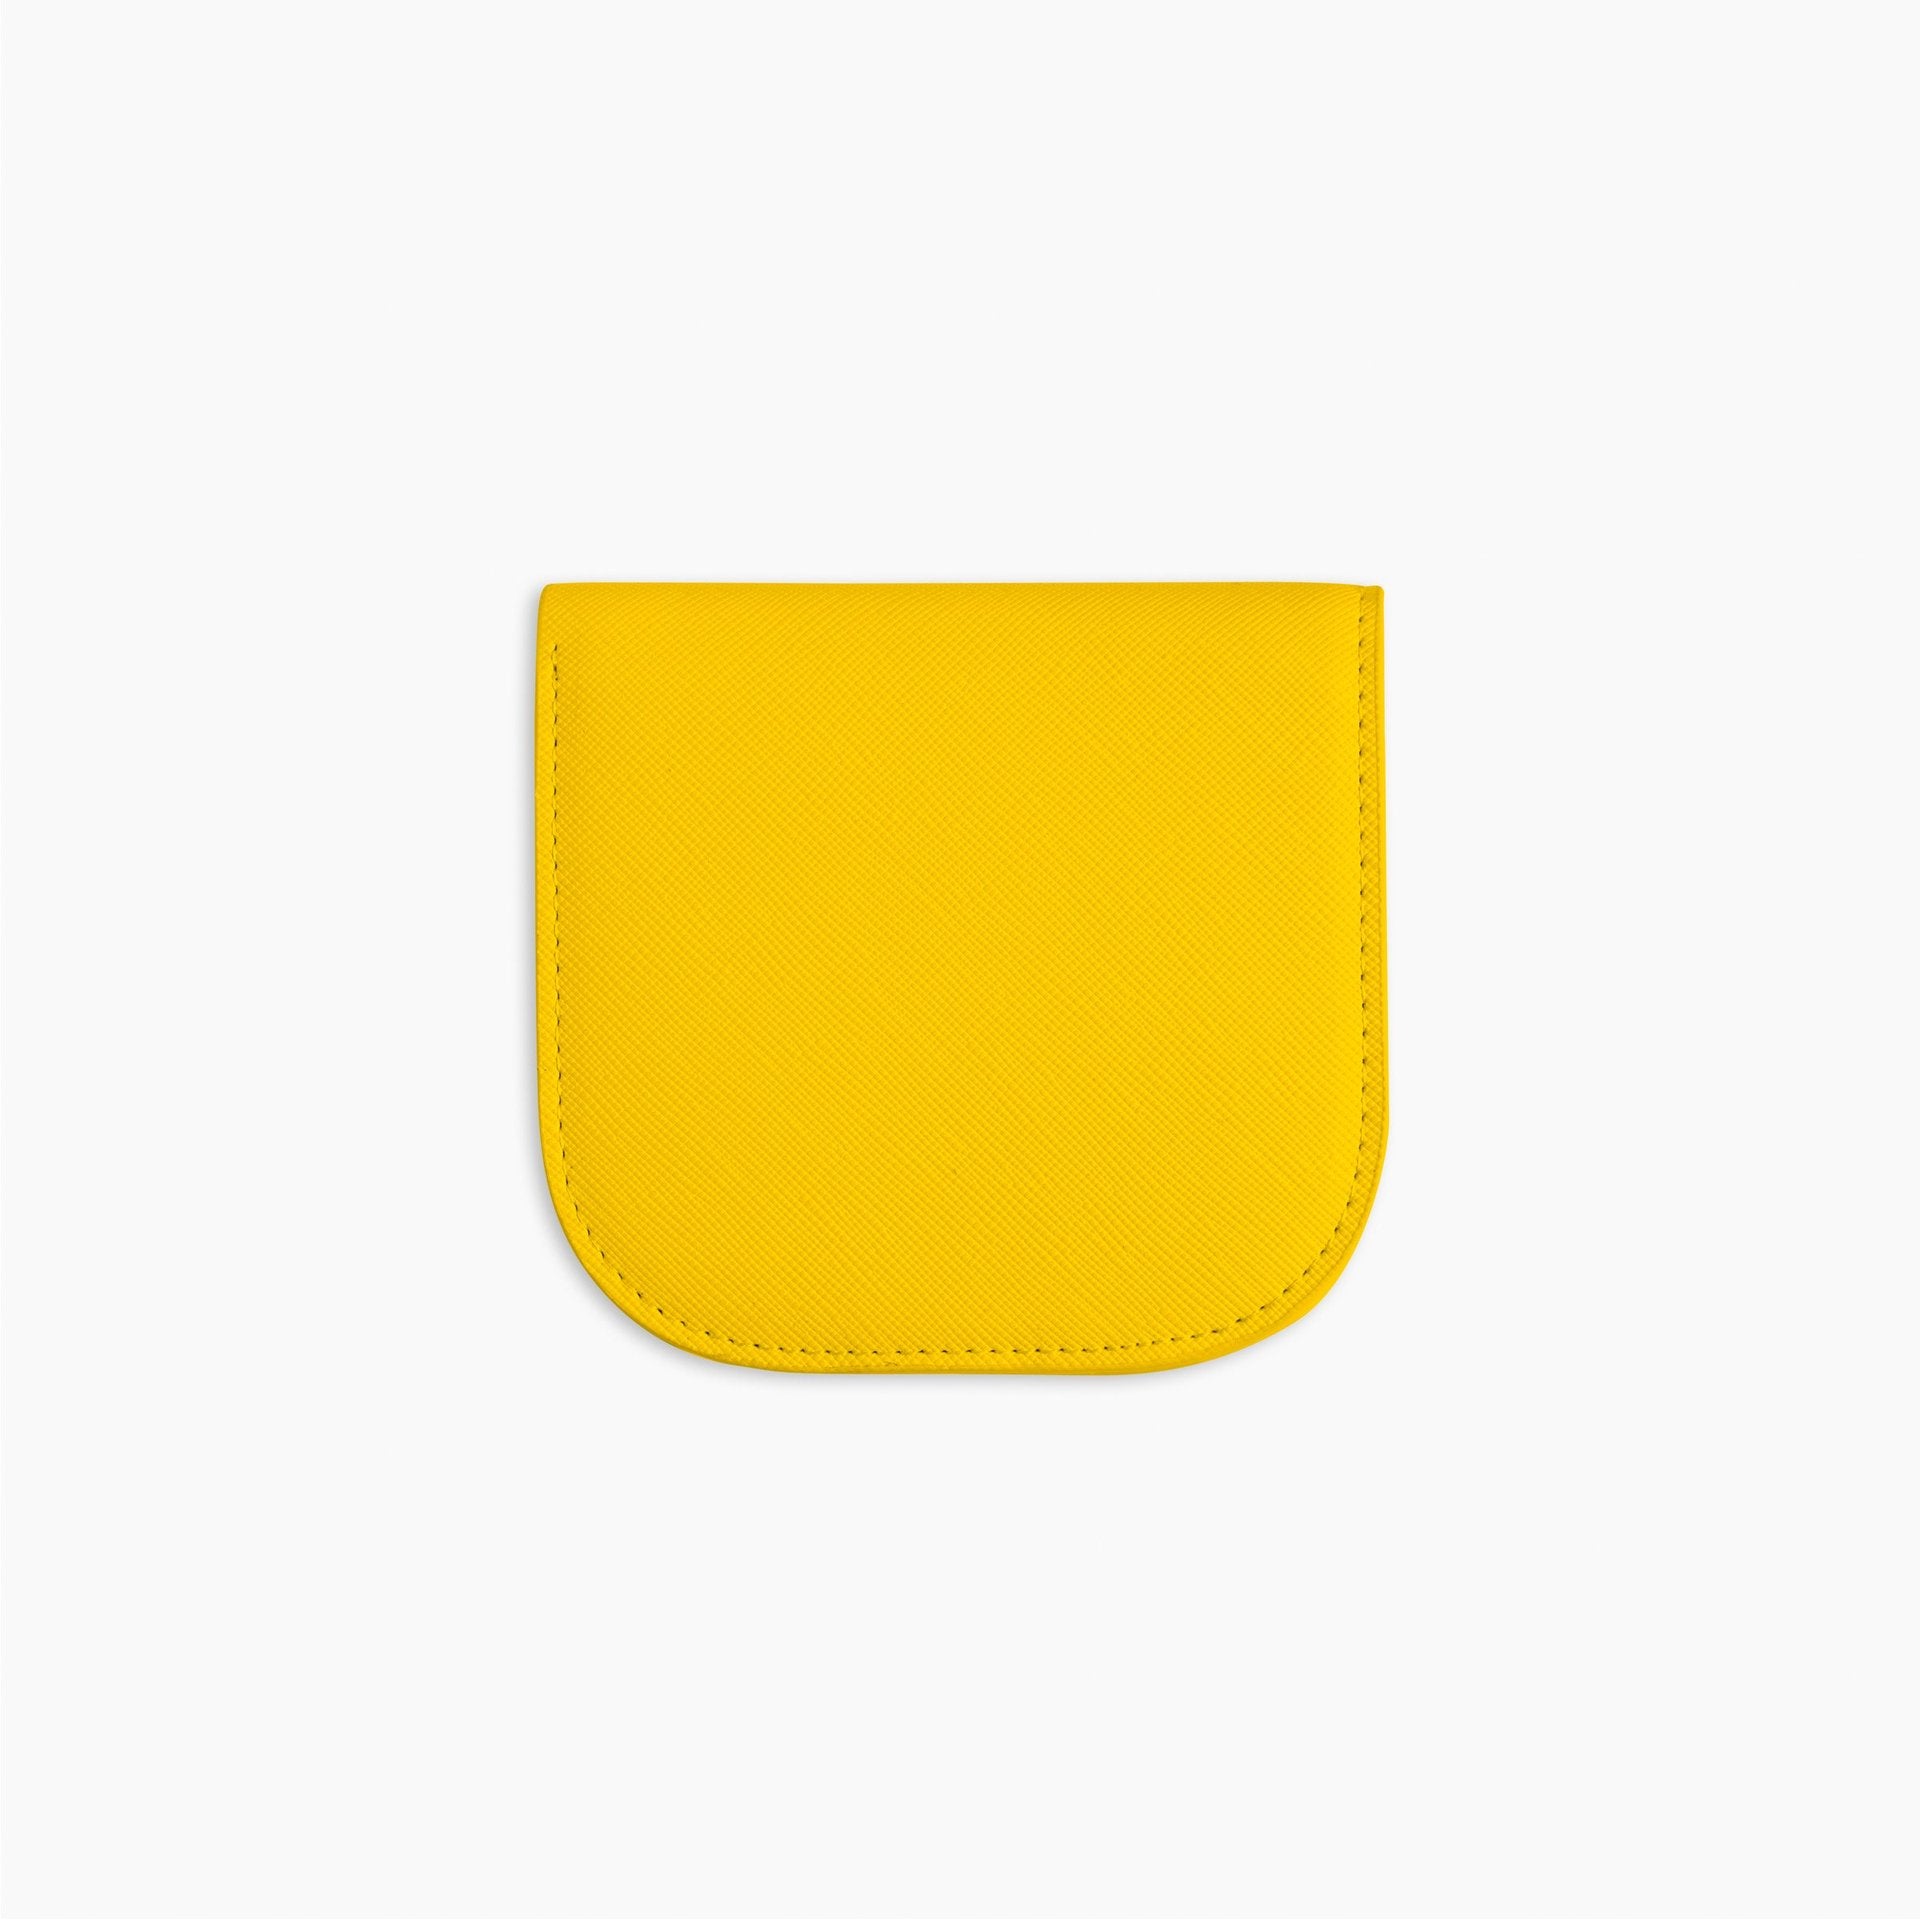 Poketo Dome Wallet in Yellow